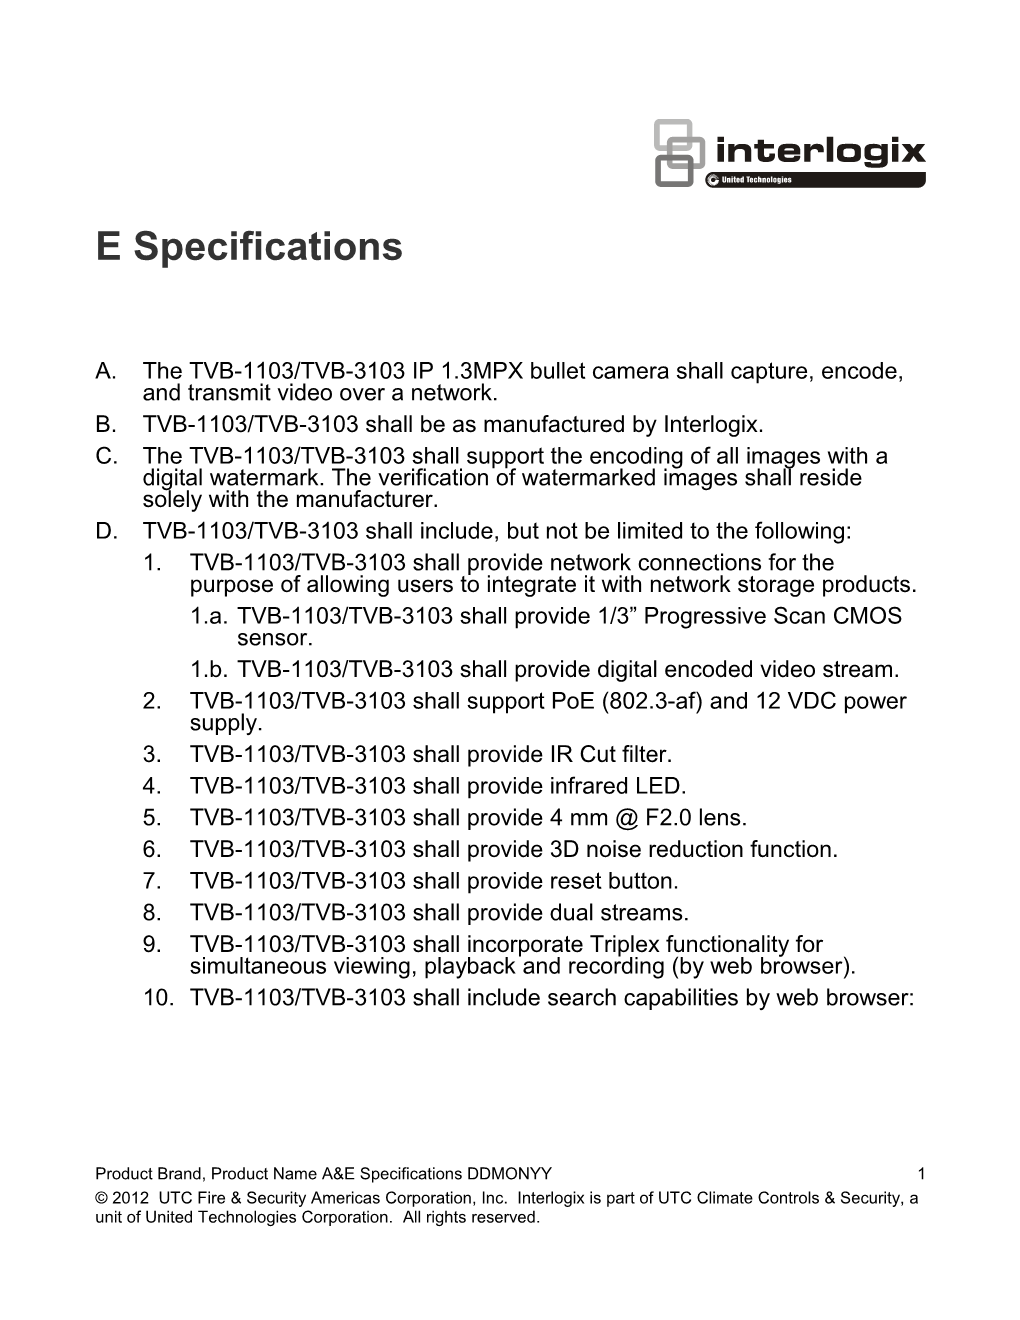 TVB-1103/TVB-3103 IP 1.3MPX Bullet Camera A&E Specifications